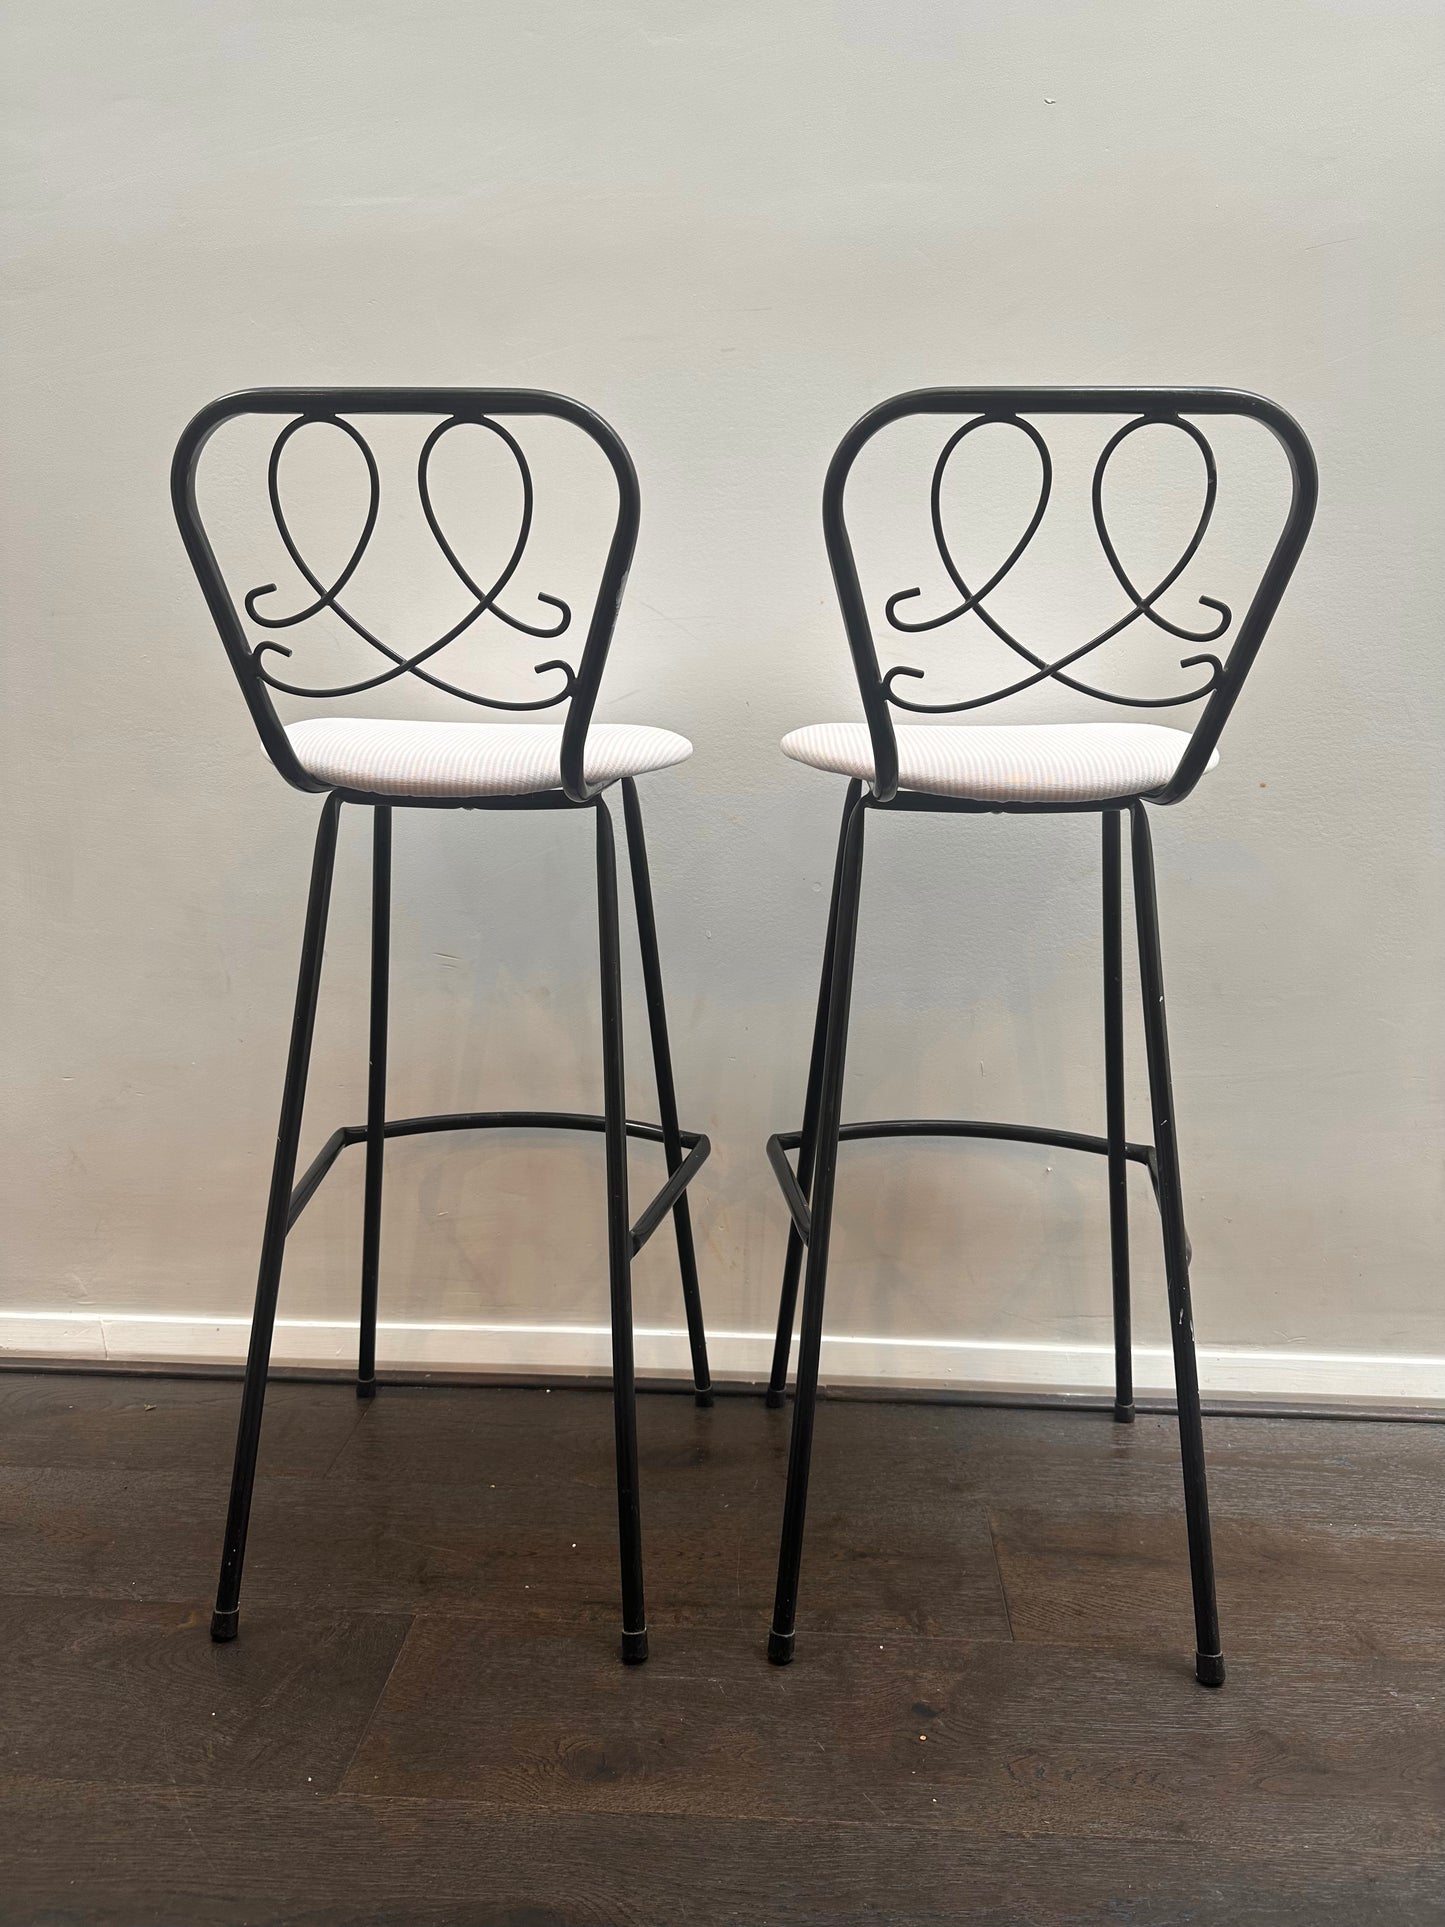 Pair of mid-century wrought iron stools